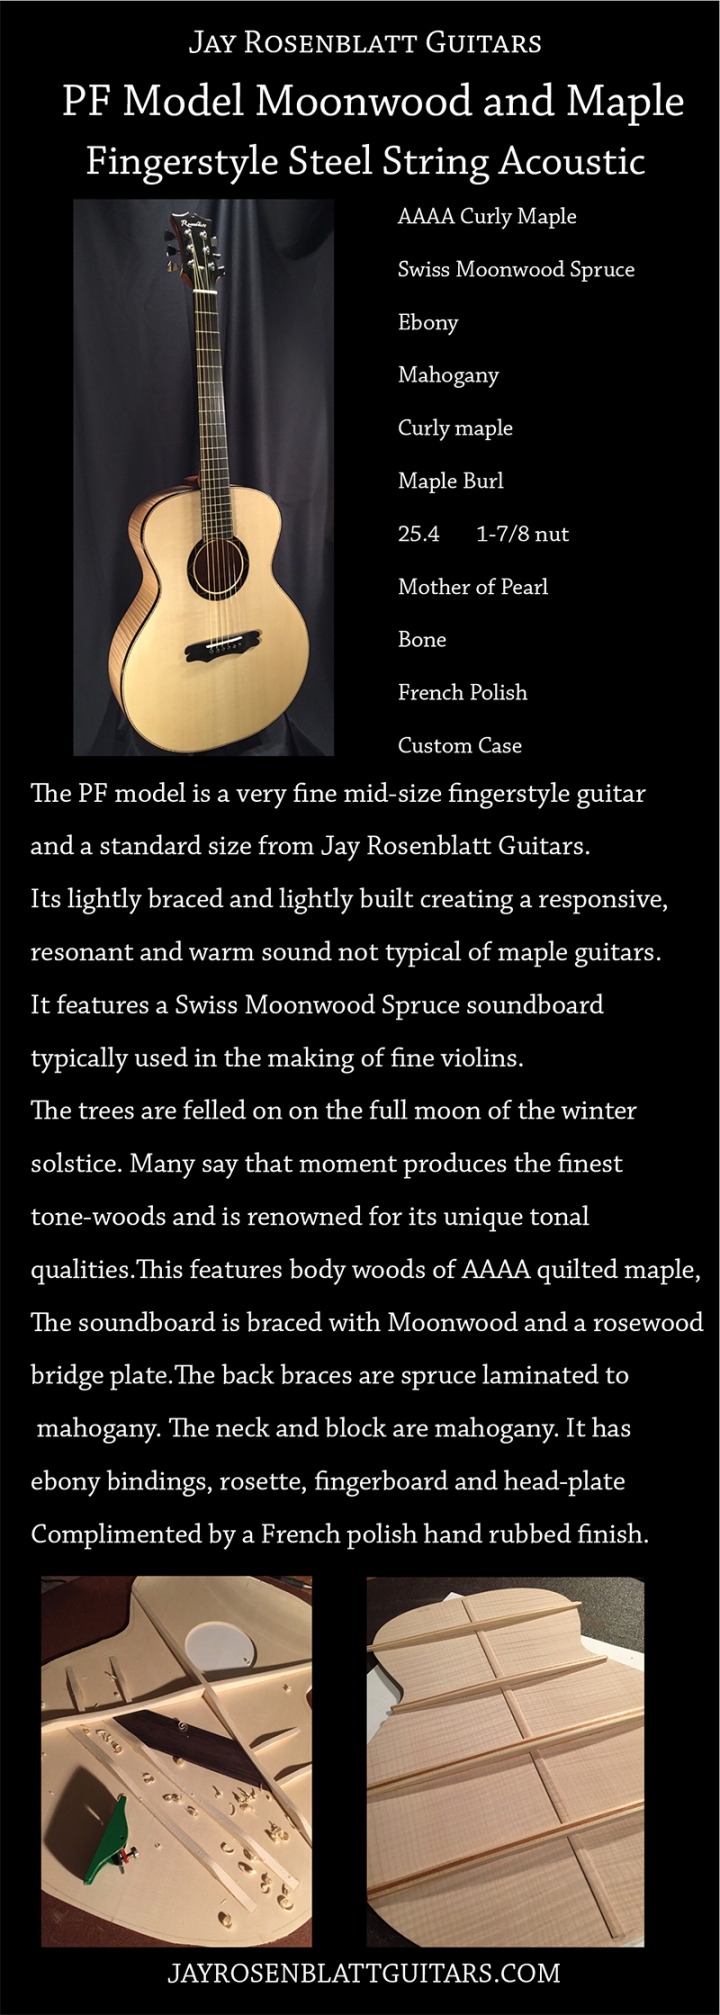 Jay Rosenblatt Guitar PF Model in Moonwood with maple and mahogany.